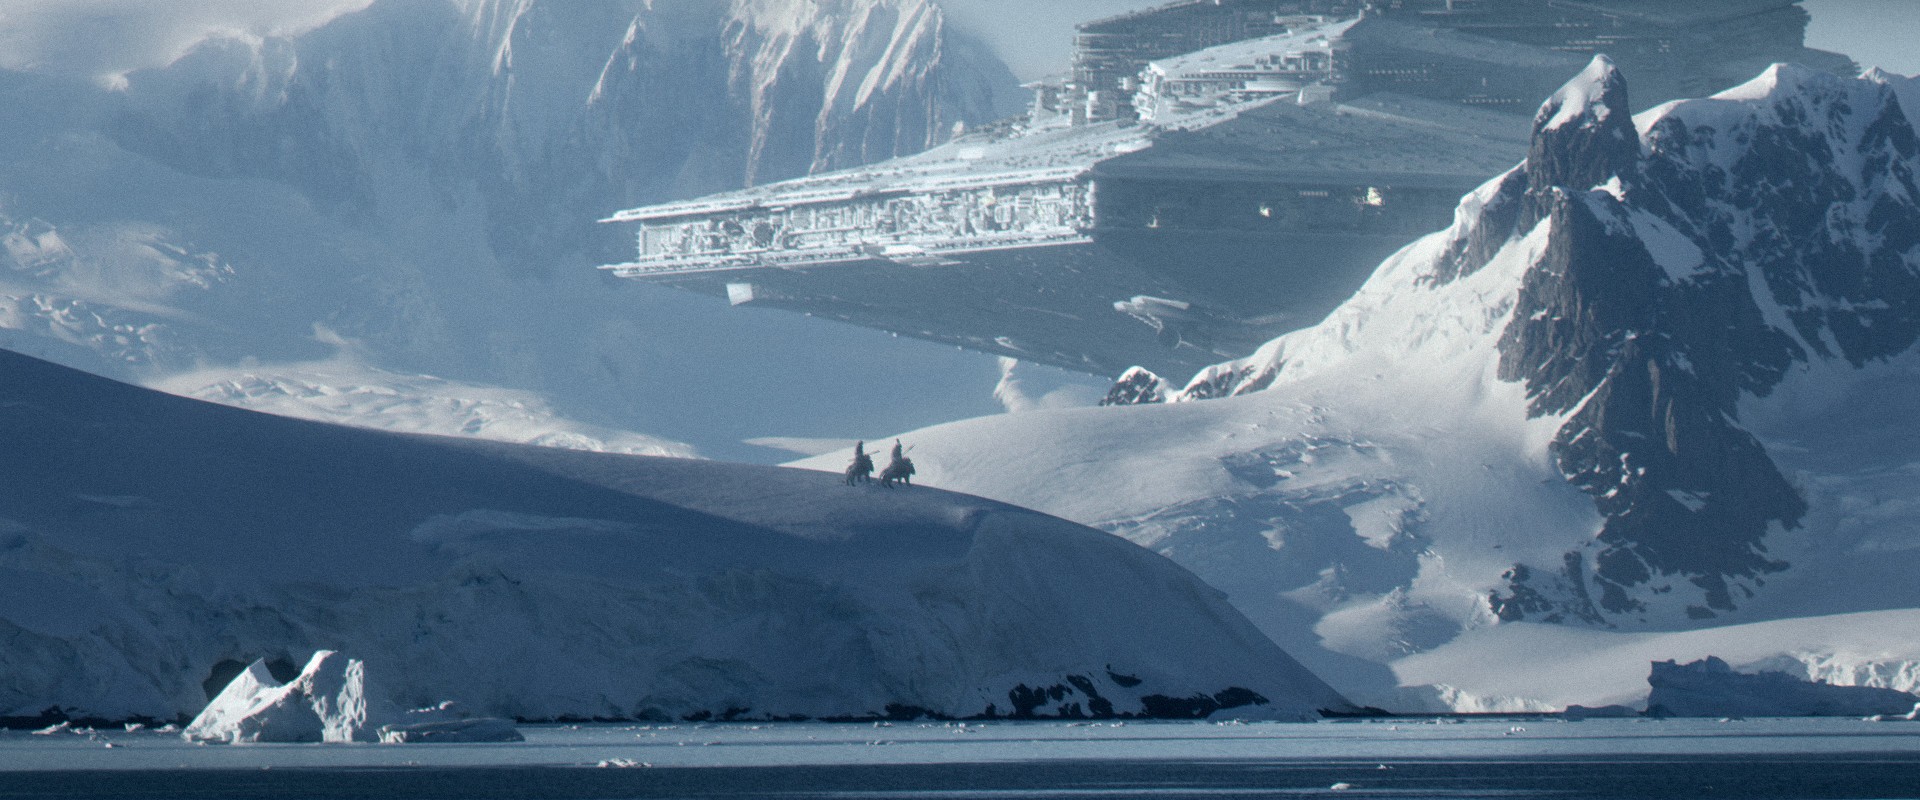 General 1920x800 Star Wars Star Destroyer science fiction snow winter